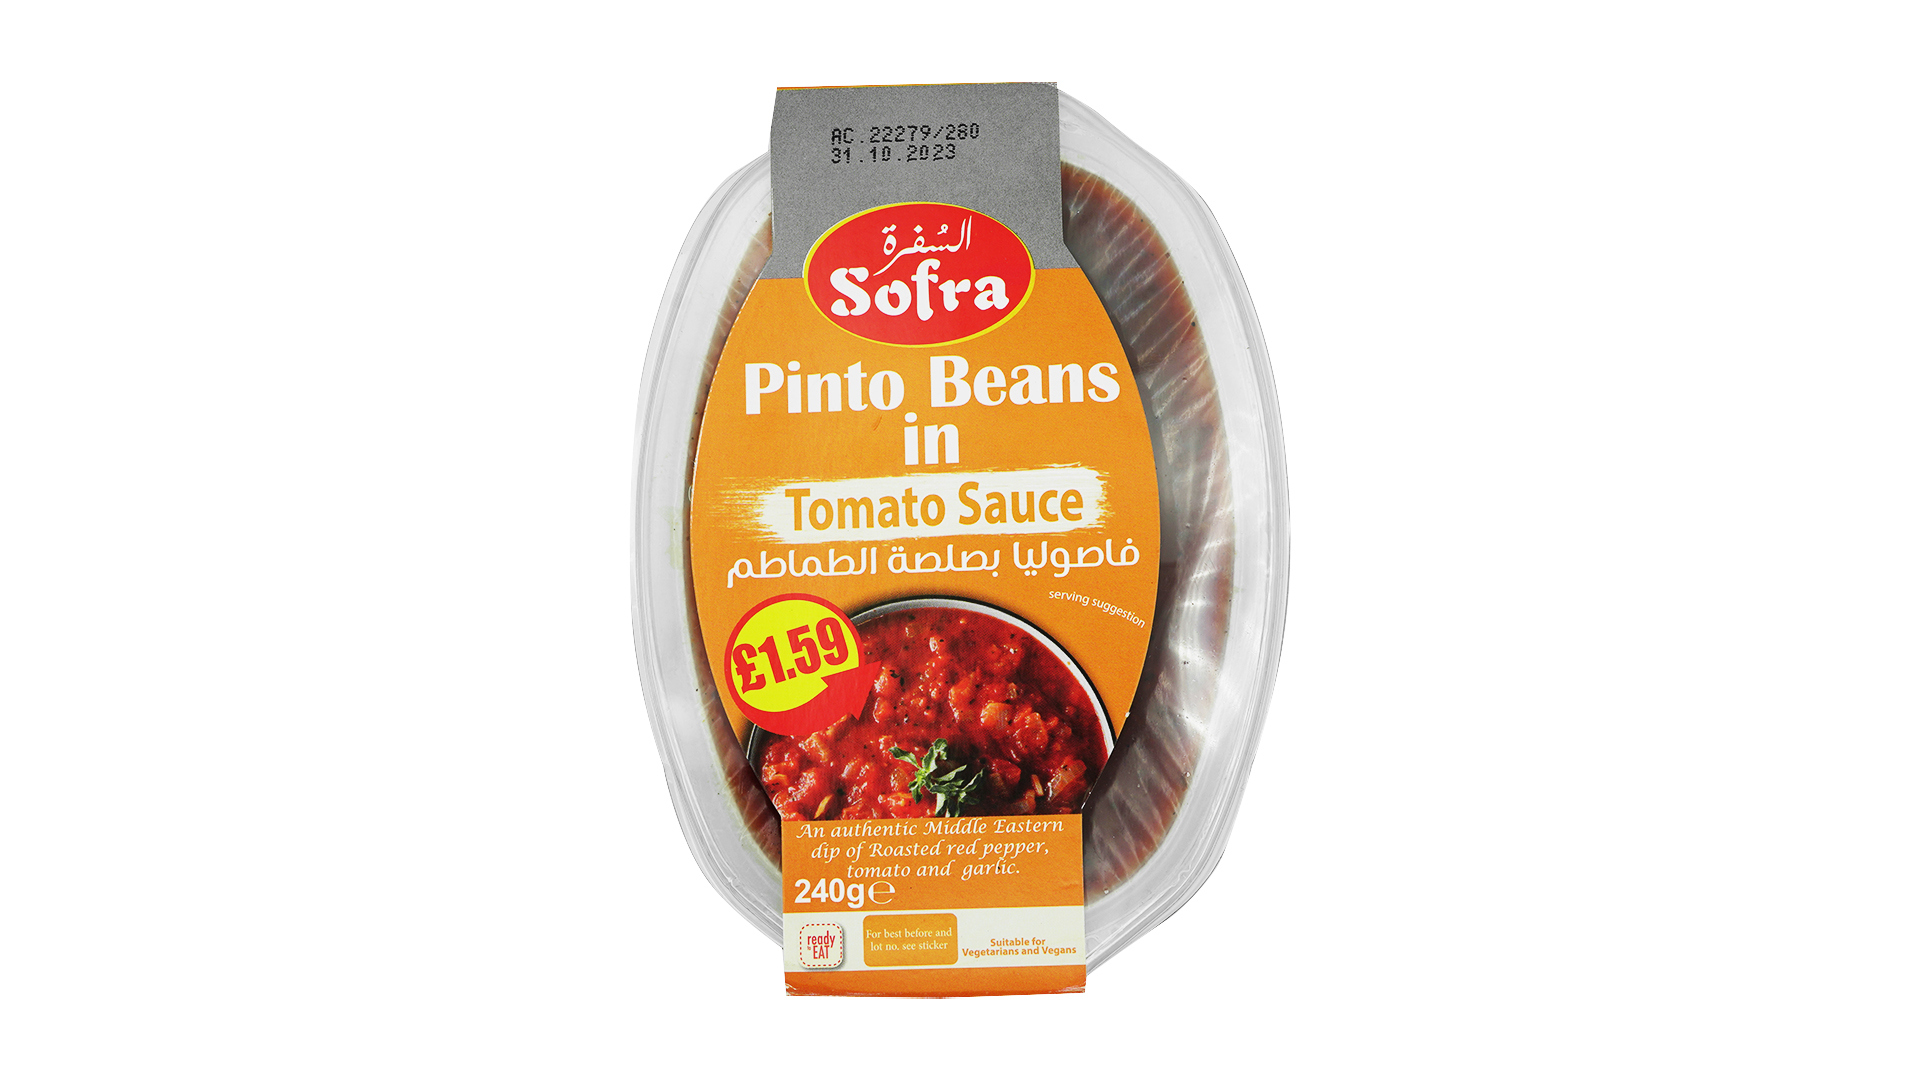 Sofra pinto beans in tomato sauce 240g 1